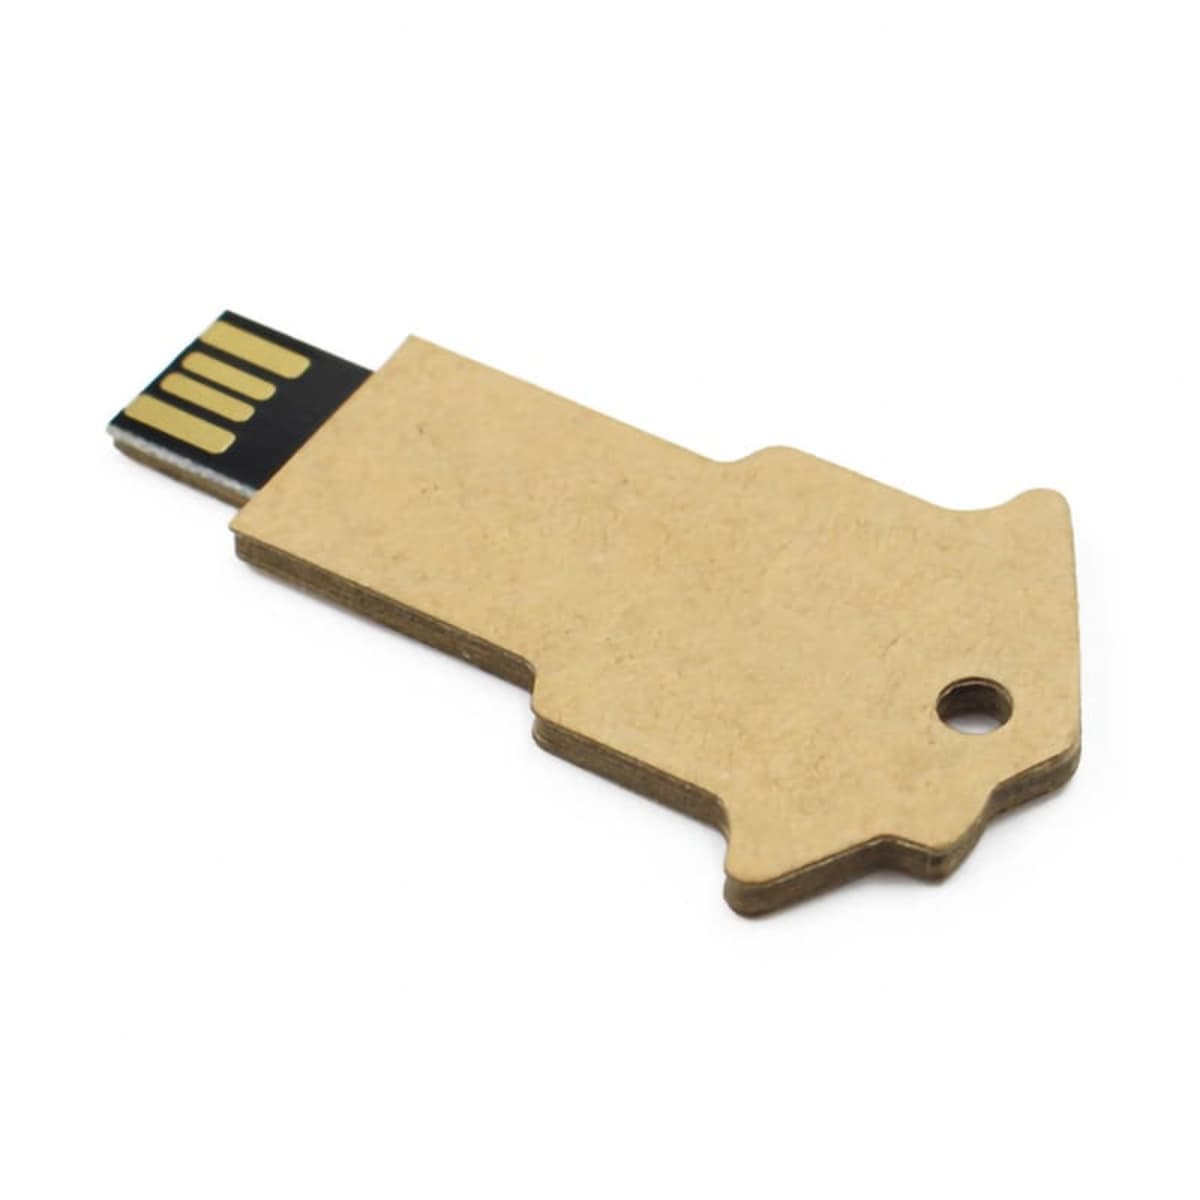 Lucas Eco Key Flash Drive